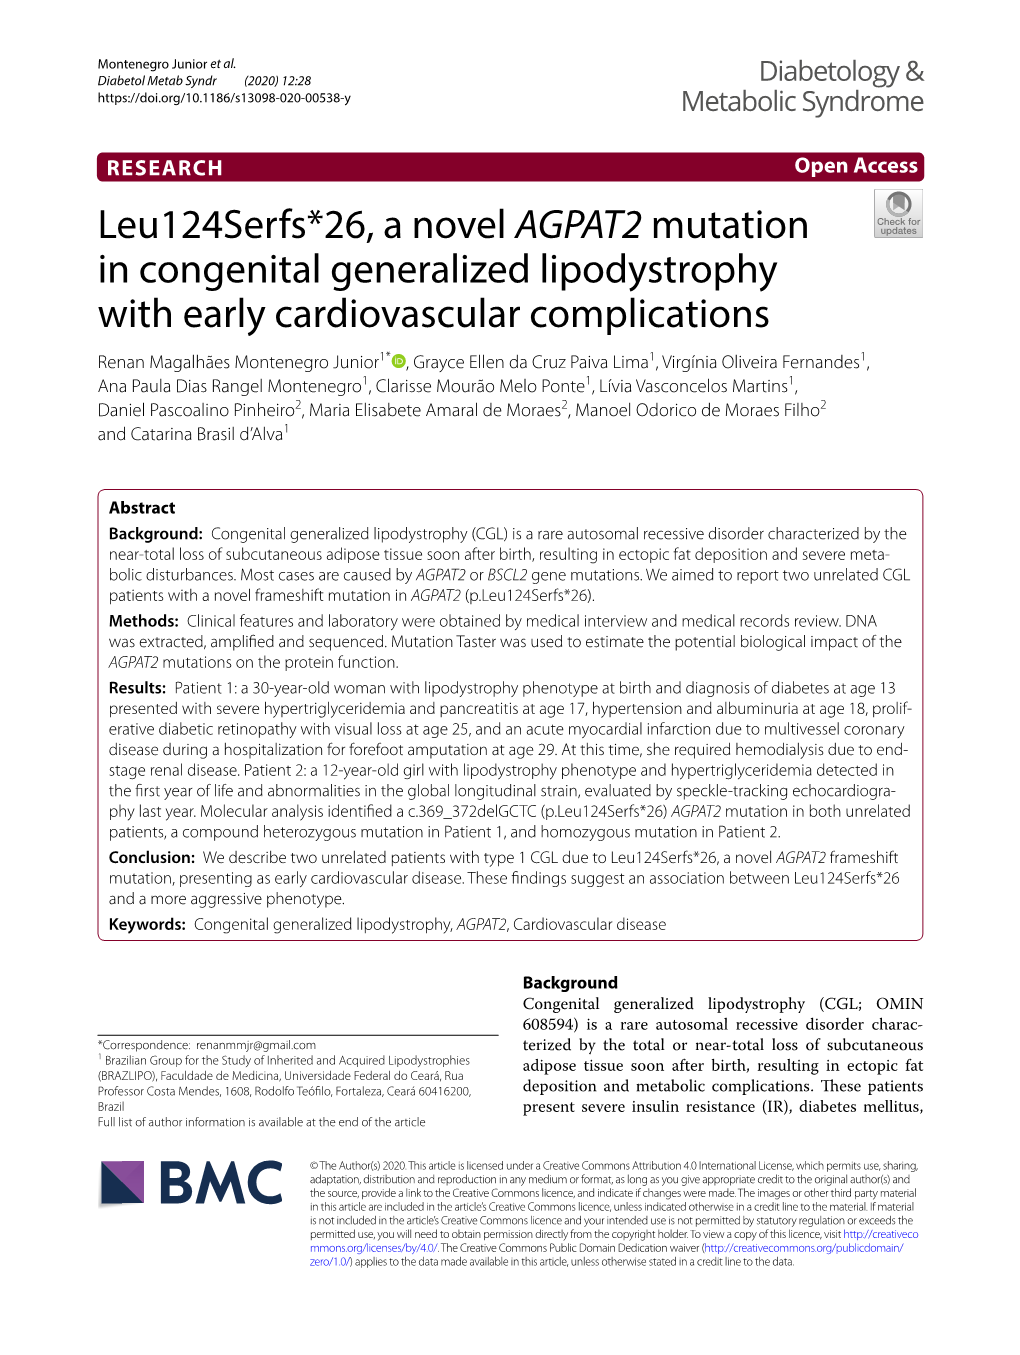 Leu124serfs*26, a Novel AGPAT2 Mutation in Congenital Generalized Lipodystrophy with Early Cardiovascular Complications